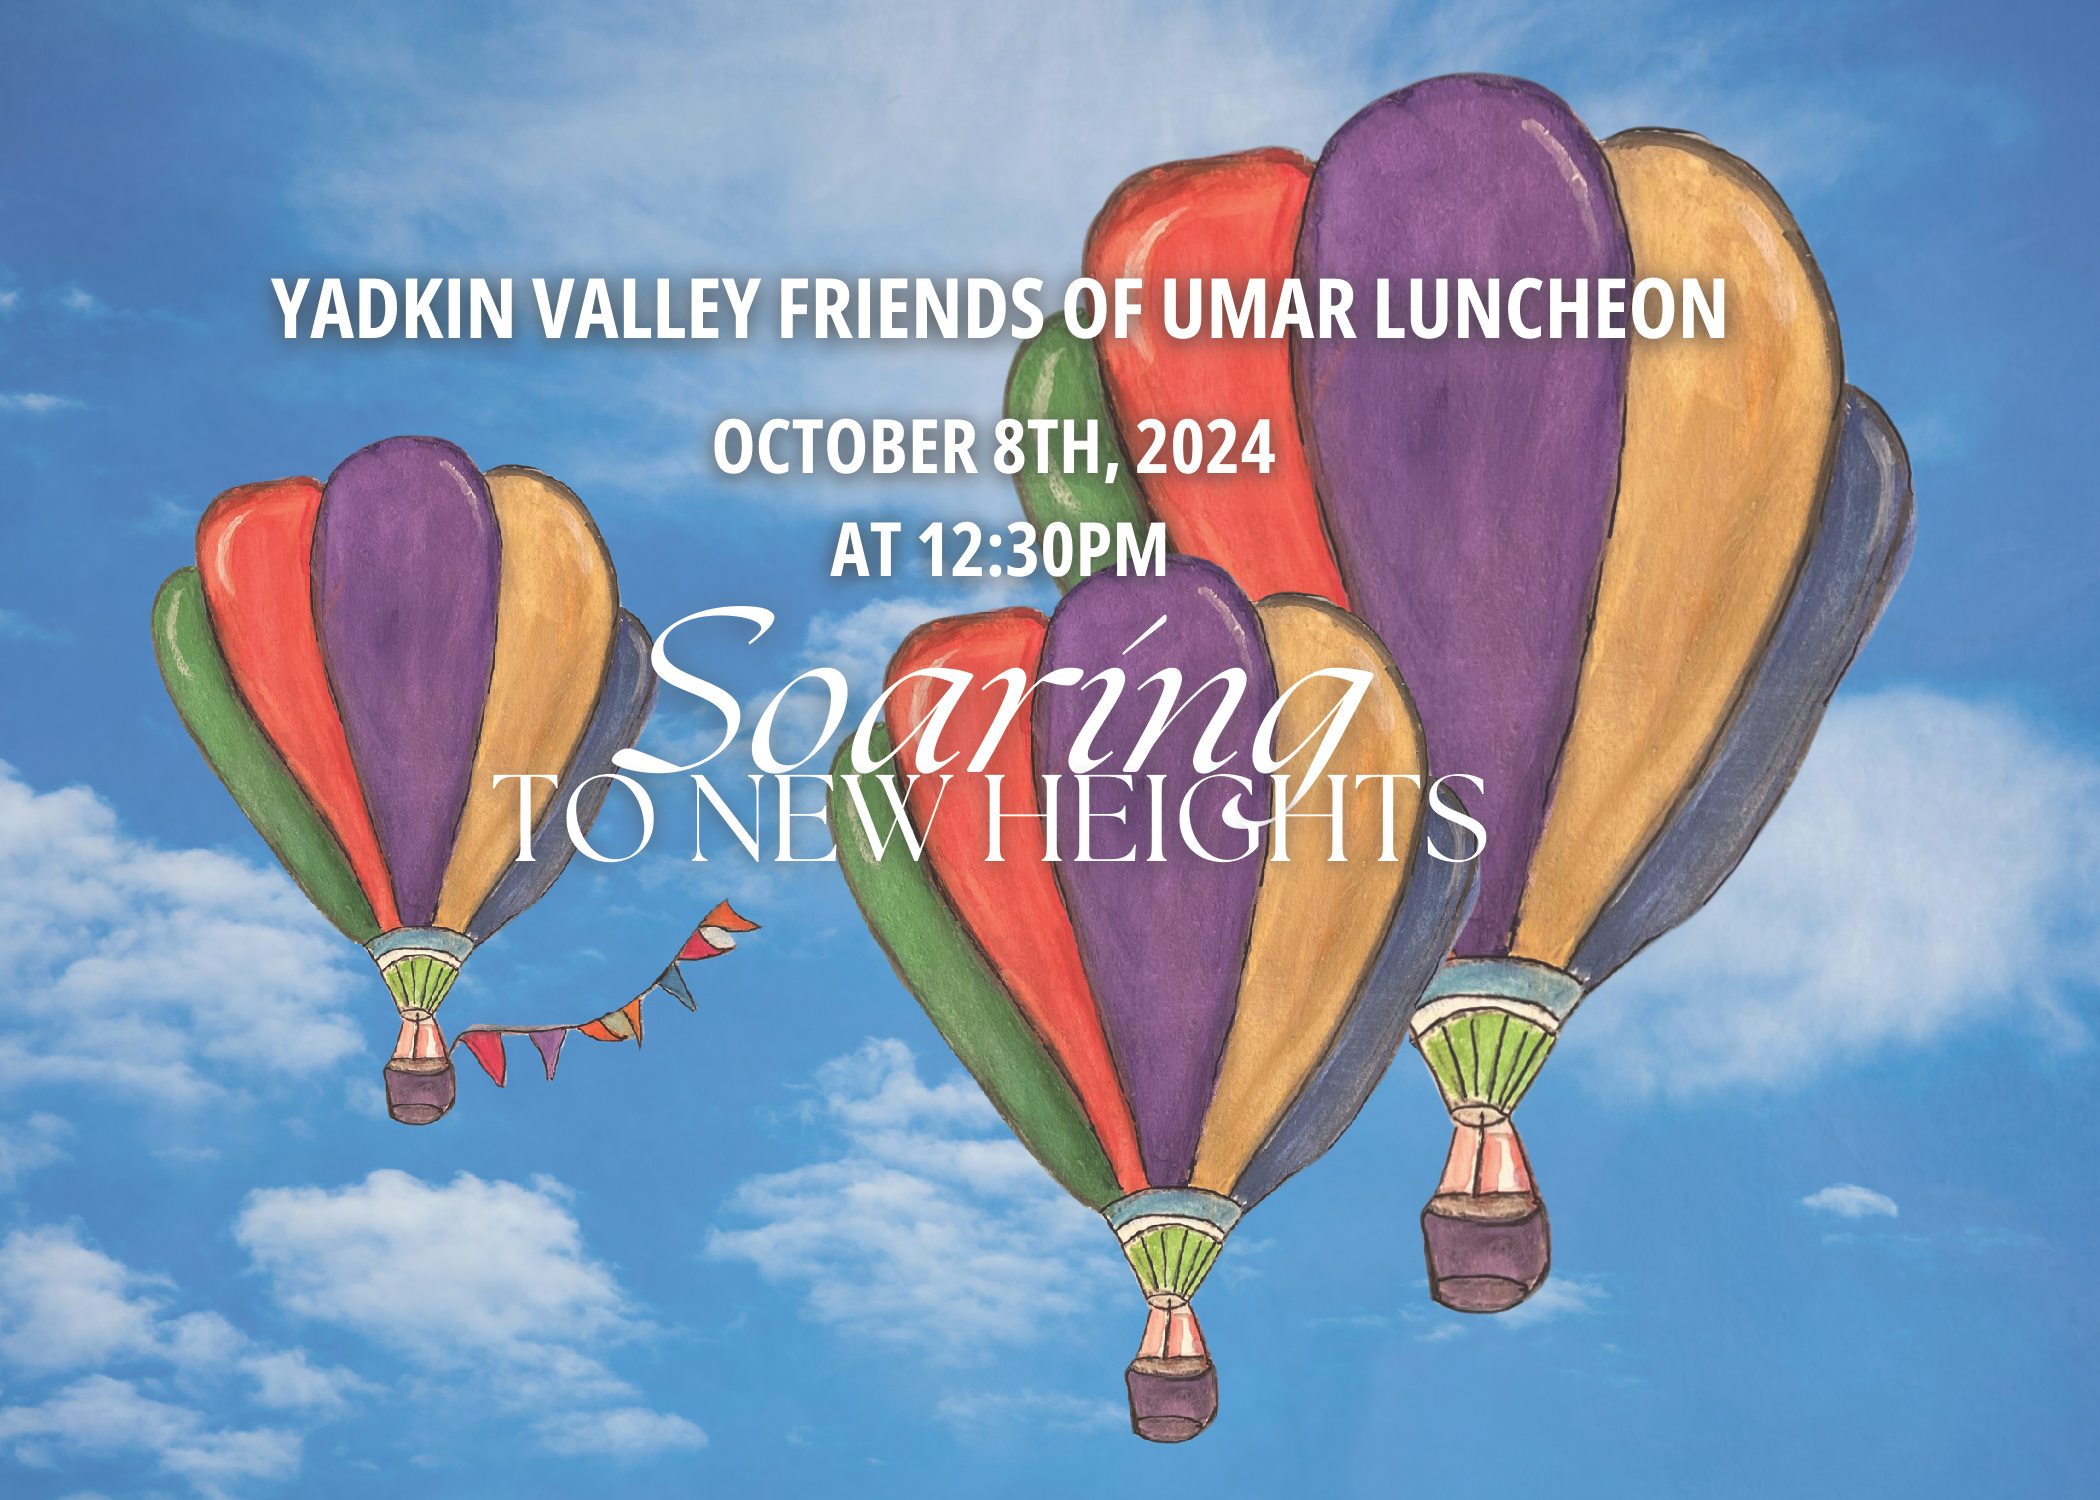 Yadkin Valley Friends of UMAR Luncheon